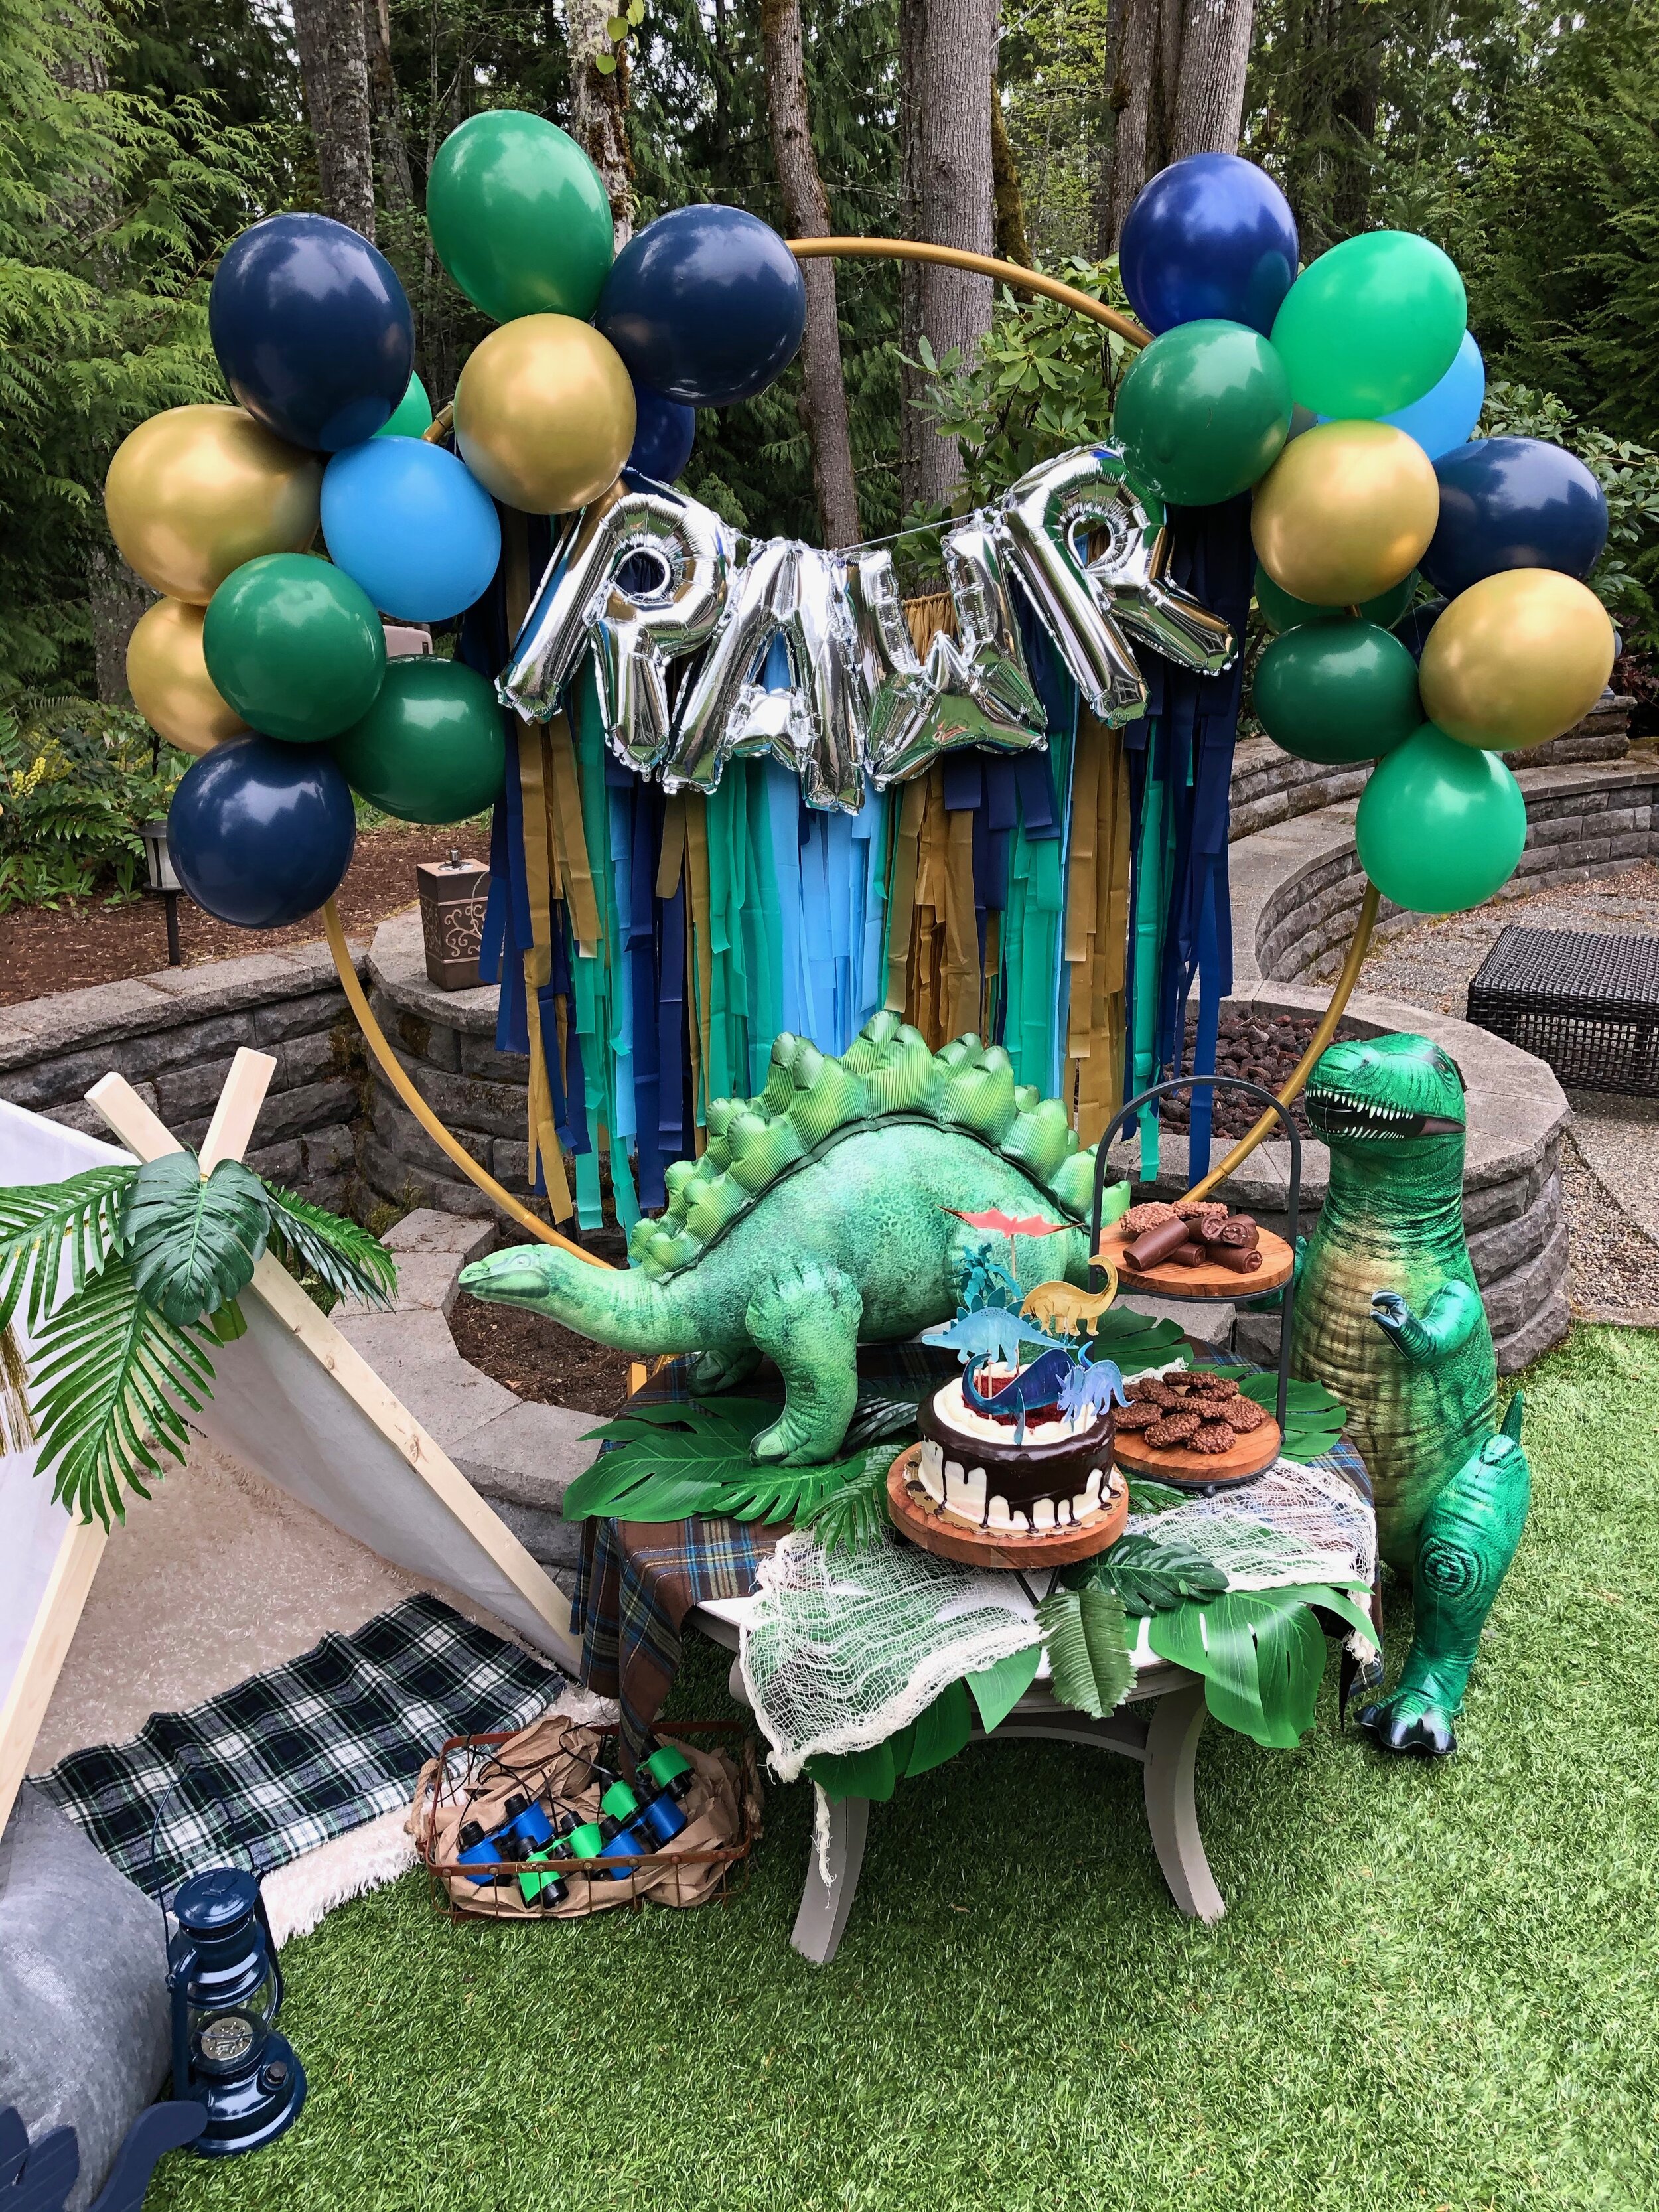 Dinosaur Party Decorations Set Dino 2nd Birthday Party Bundle Boys